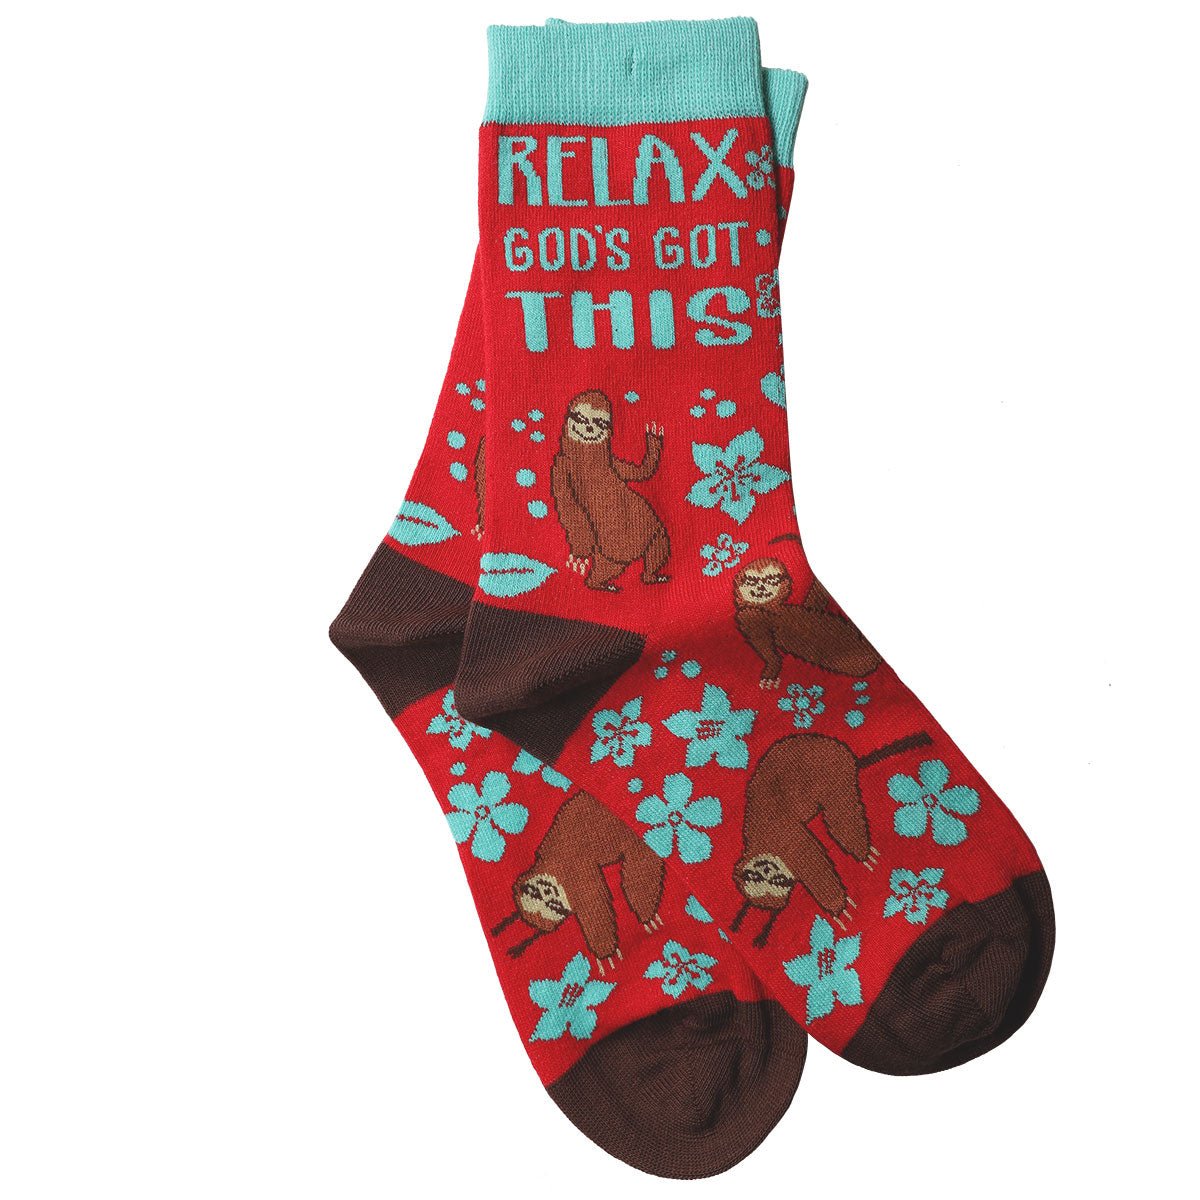 Relax Sloth™ | Bless My Sole® Socks - Zealous Christian Gear - 3